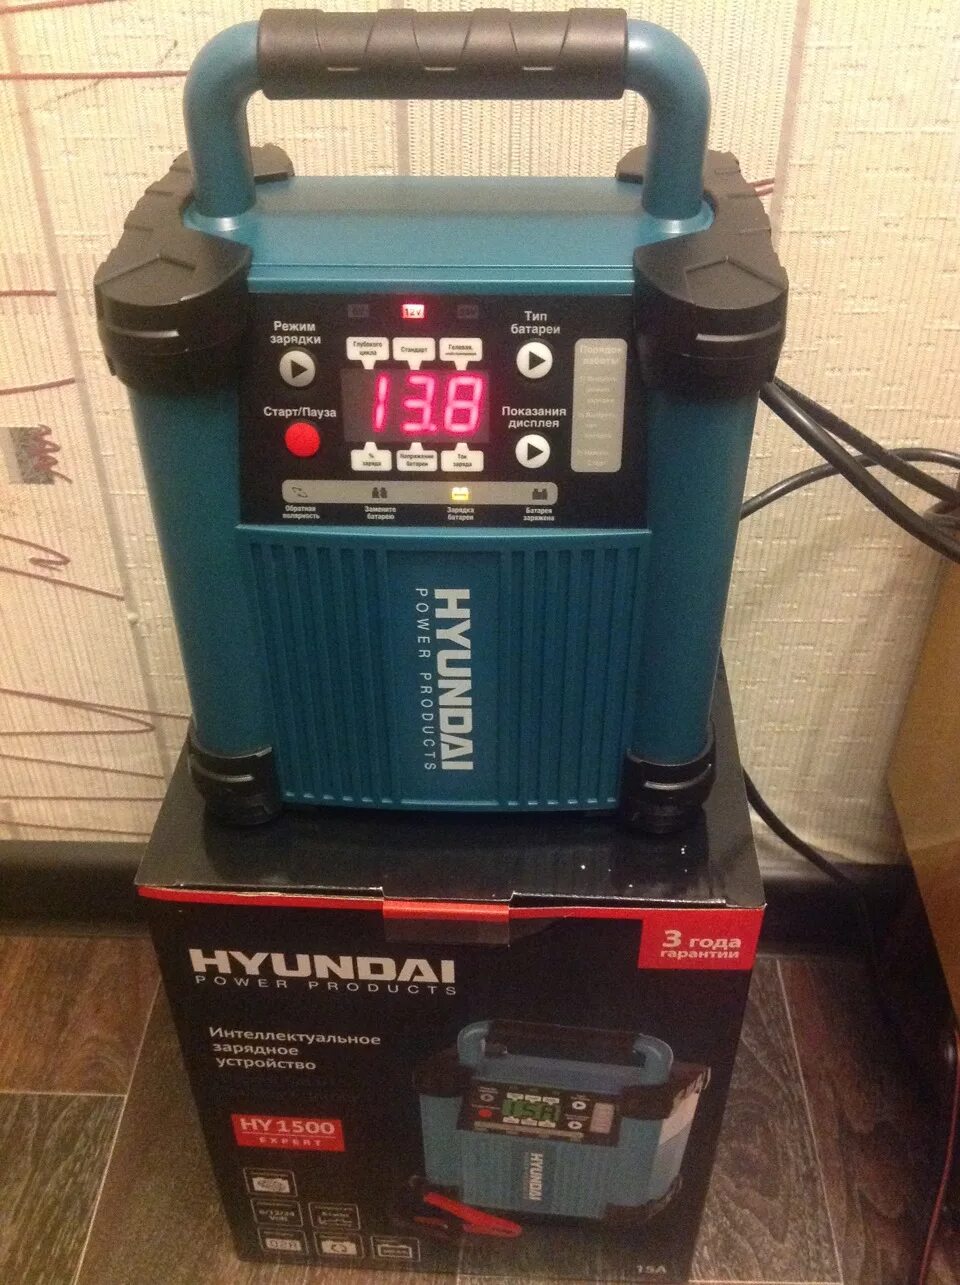 Hyundai Hy 1500. Зарядное устройство Hyundai Hy 1500. Зарядка для аккумулятора автомобиля Хендай. Зарядка для аккумулятора Hyundai.